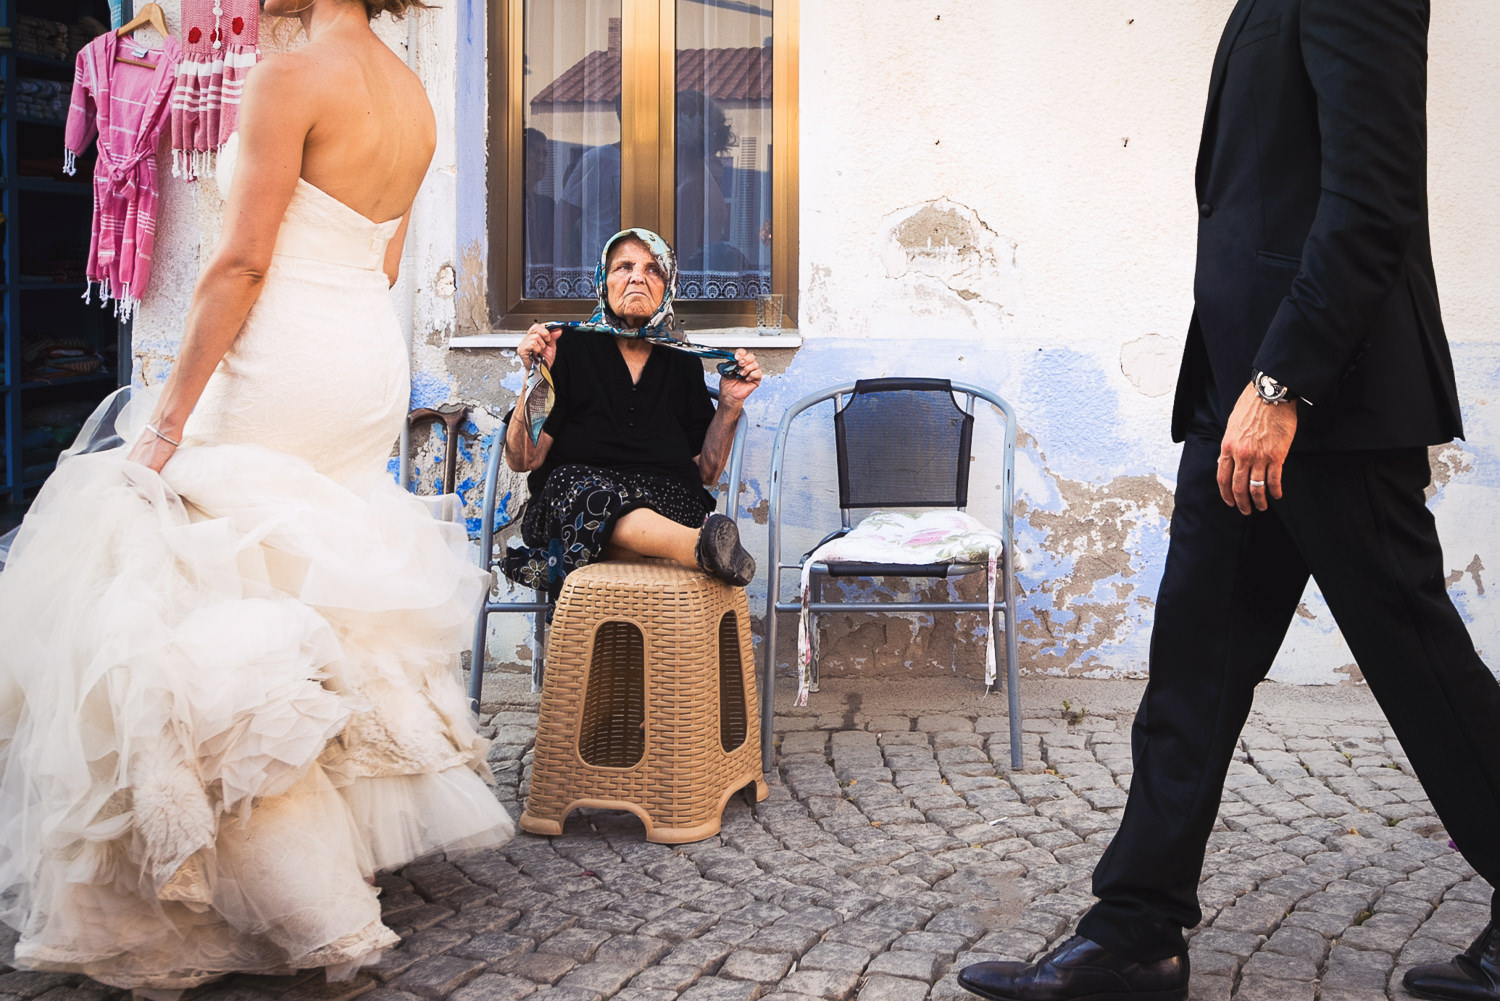 Callaway Gable | Funny Wedding Photos That Will Make You Smile